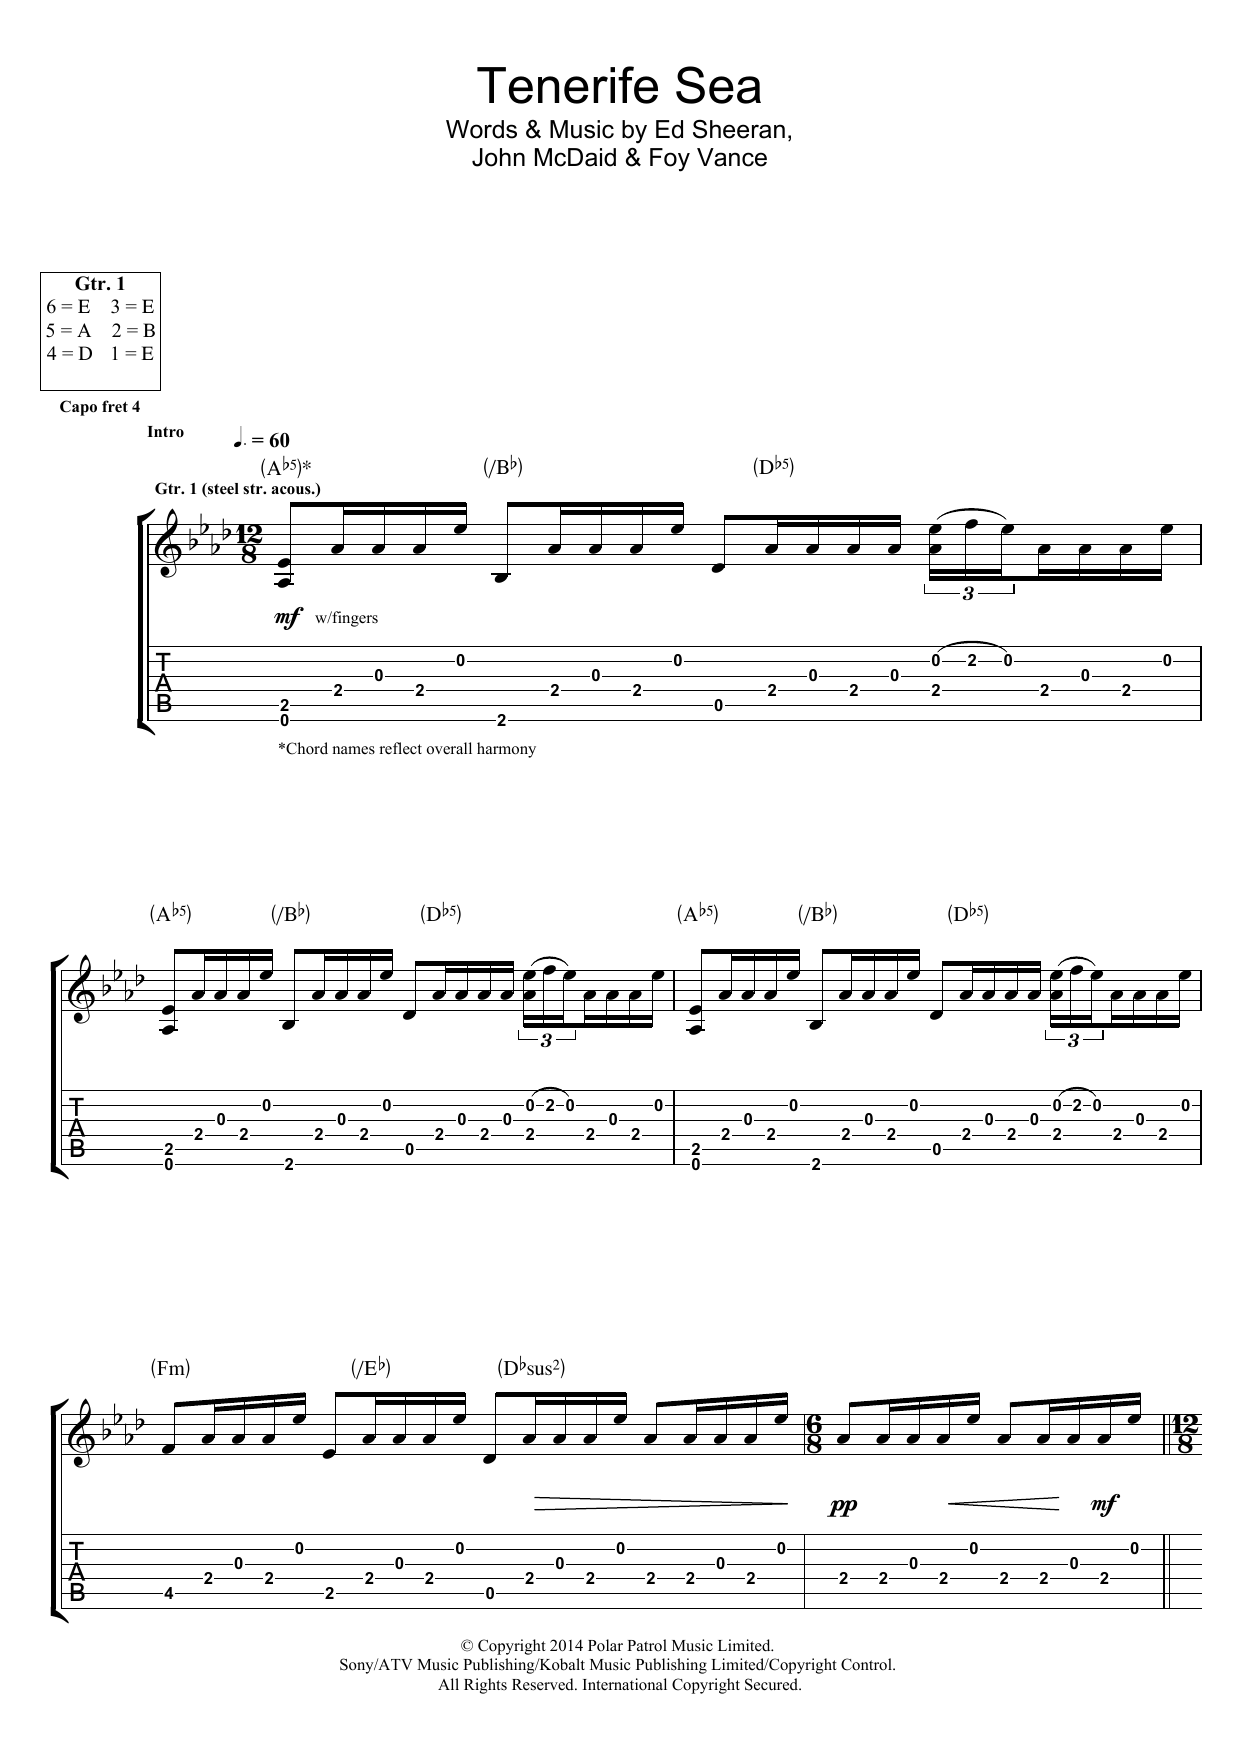 Ed Sheeran Tenerife Sea Sheet Music Notes & Chords for Easy Guitar Tab - Download or Print PDF